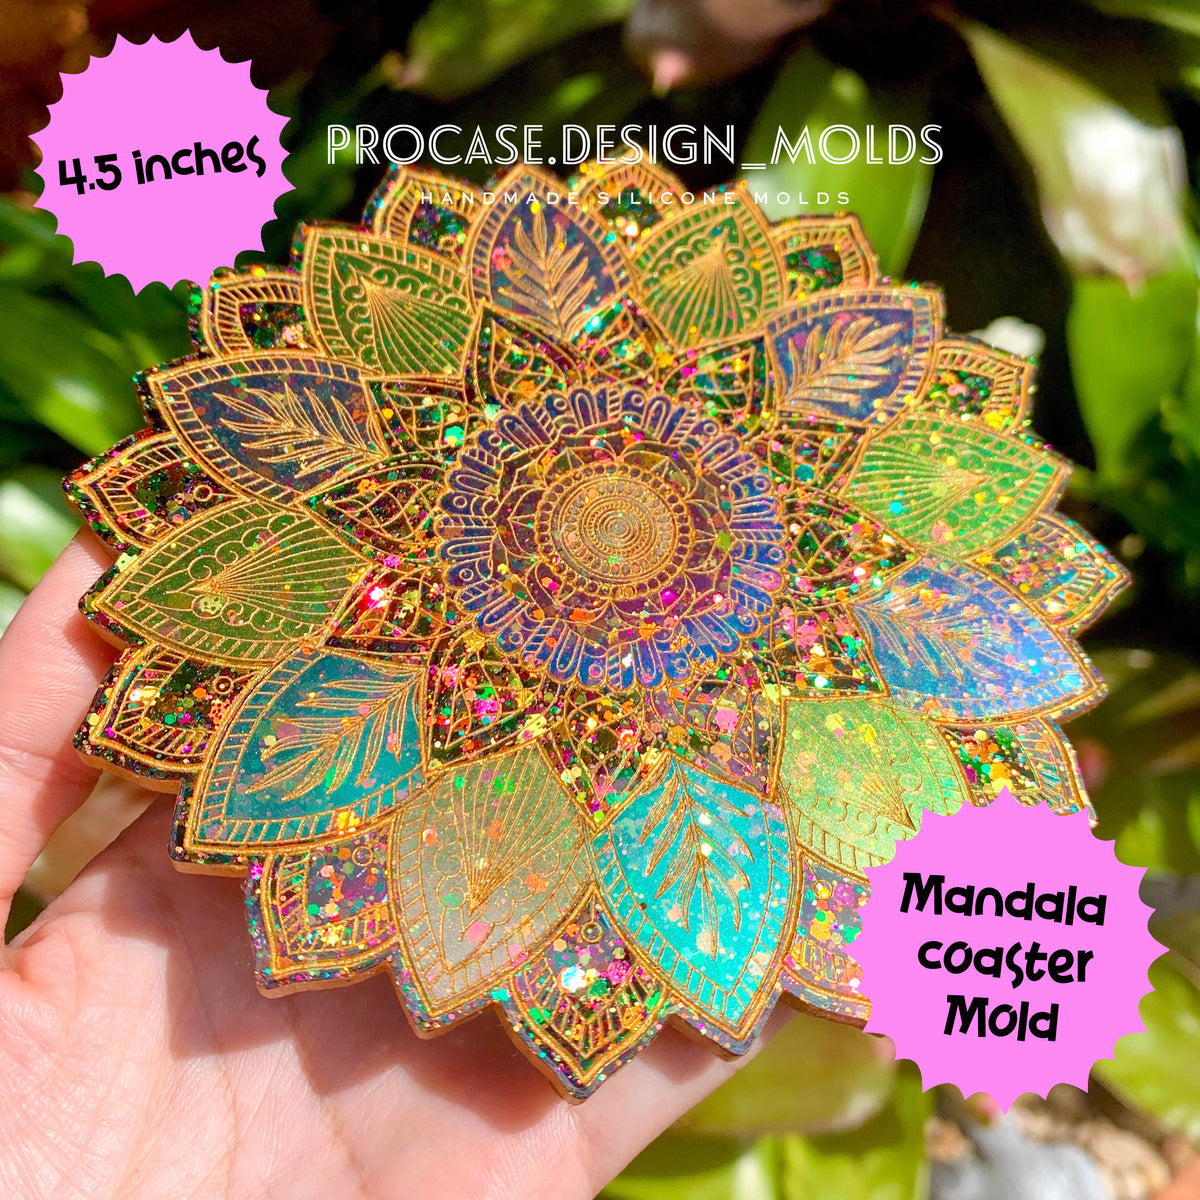 Resin Coaster Molds Mandala Design, Set of 2